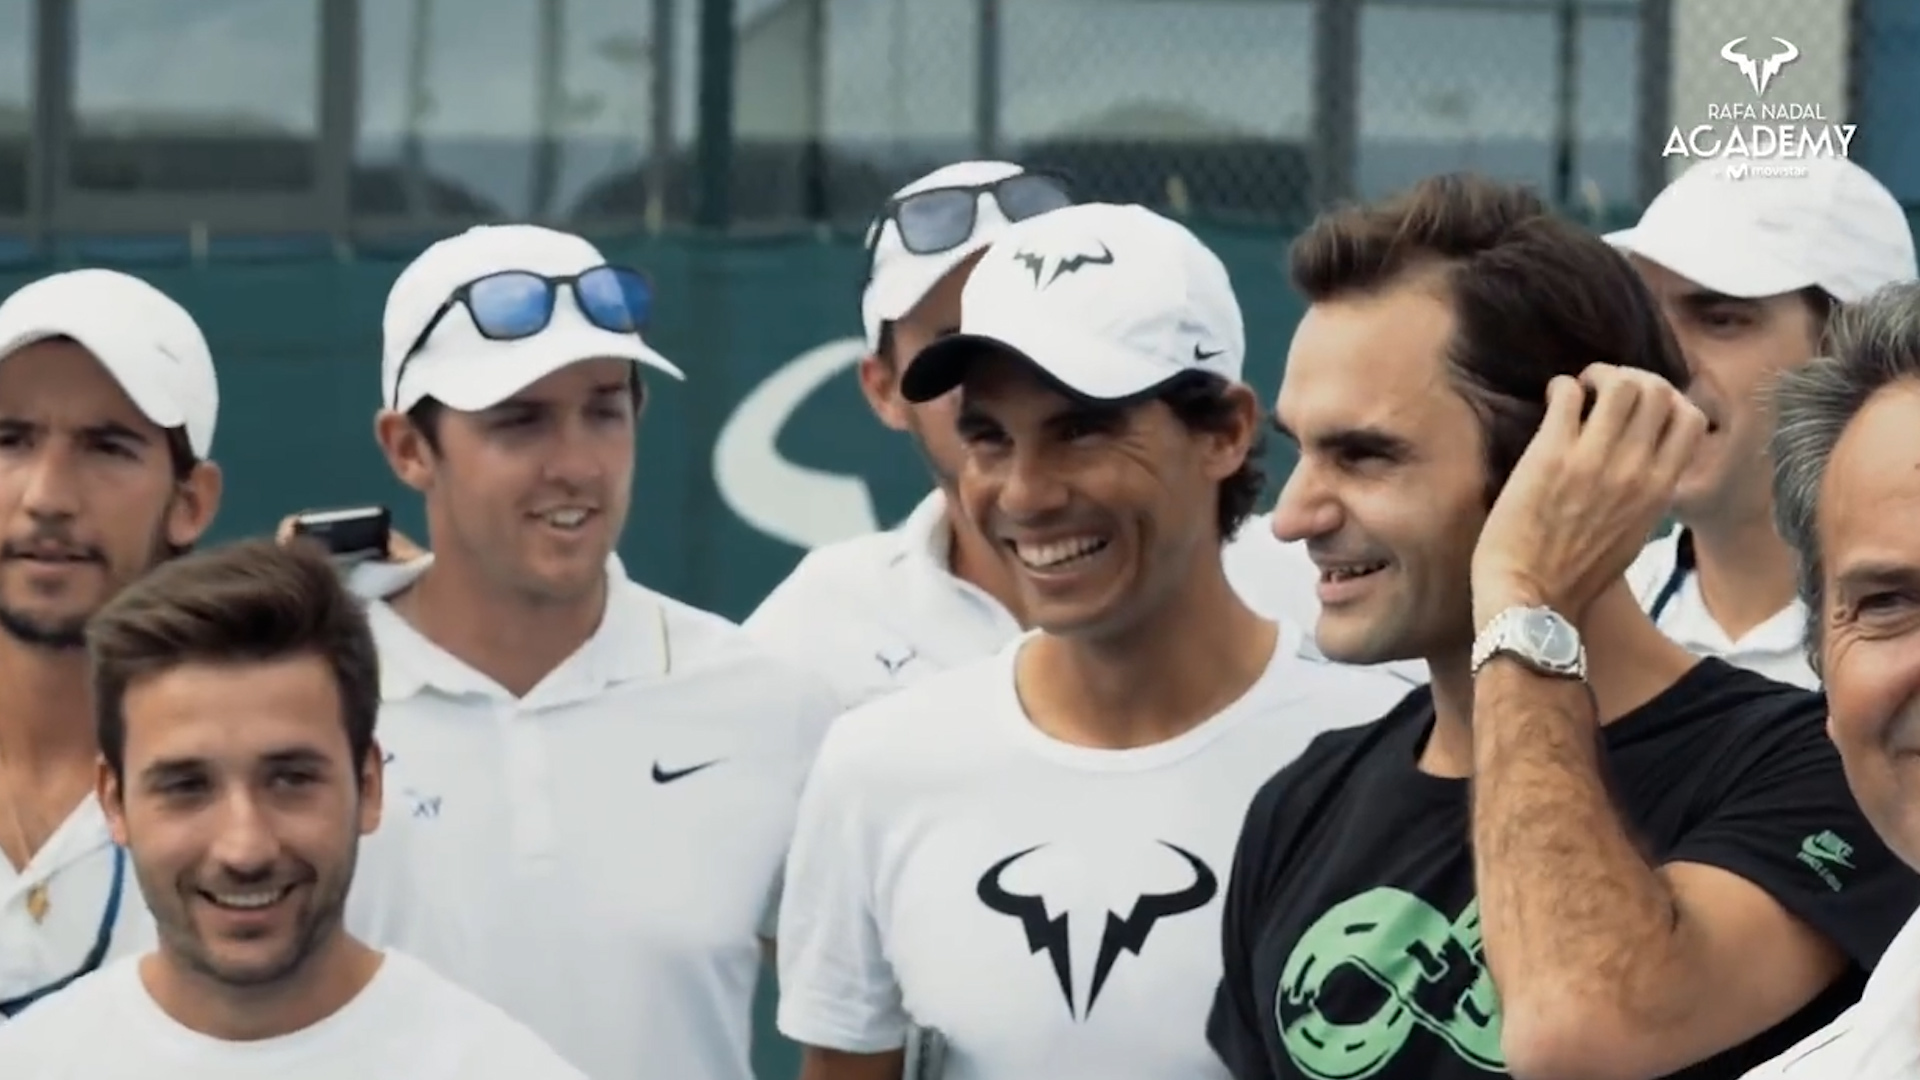 The Rafa Nadal Academy's touching goodbye to Roger Federer